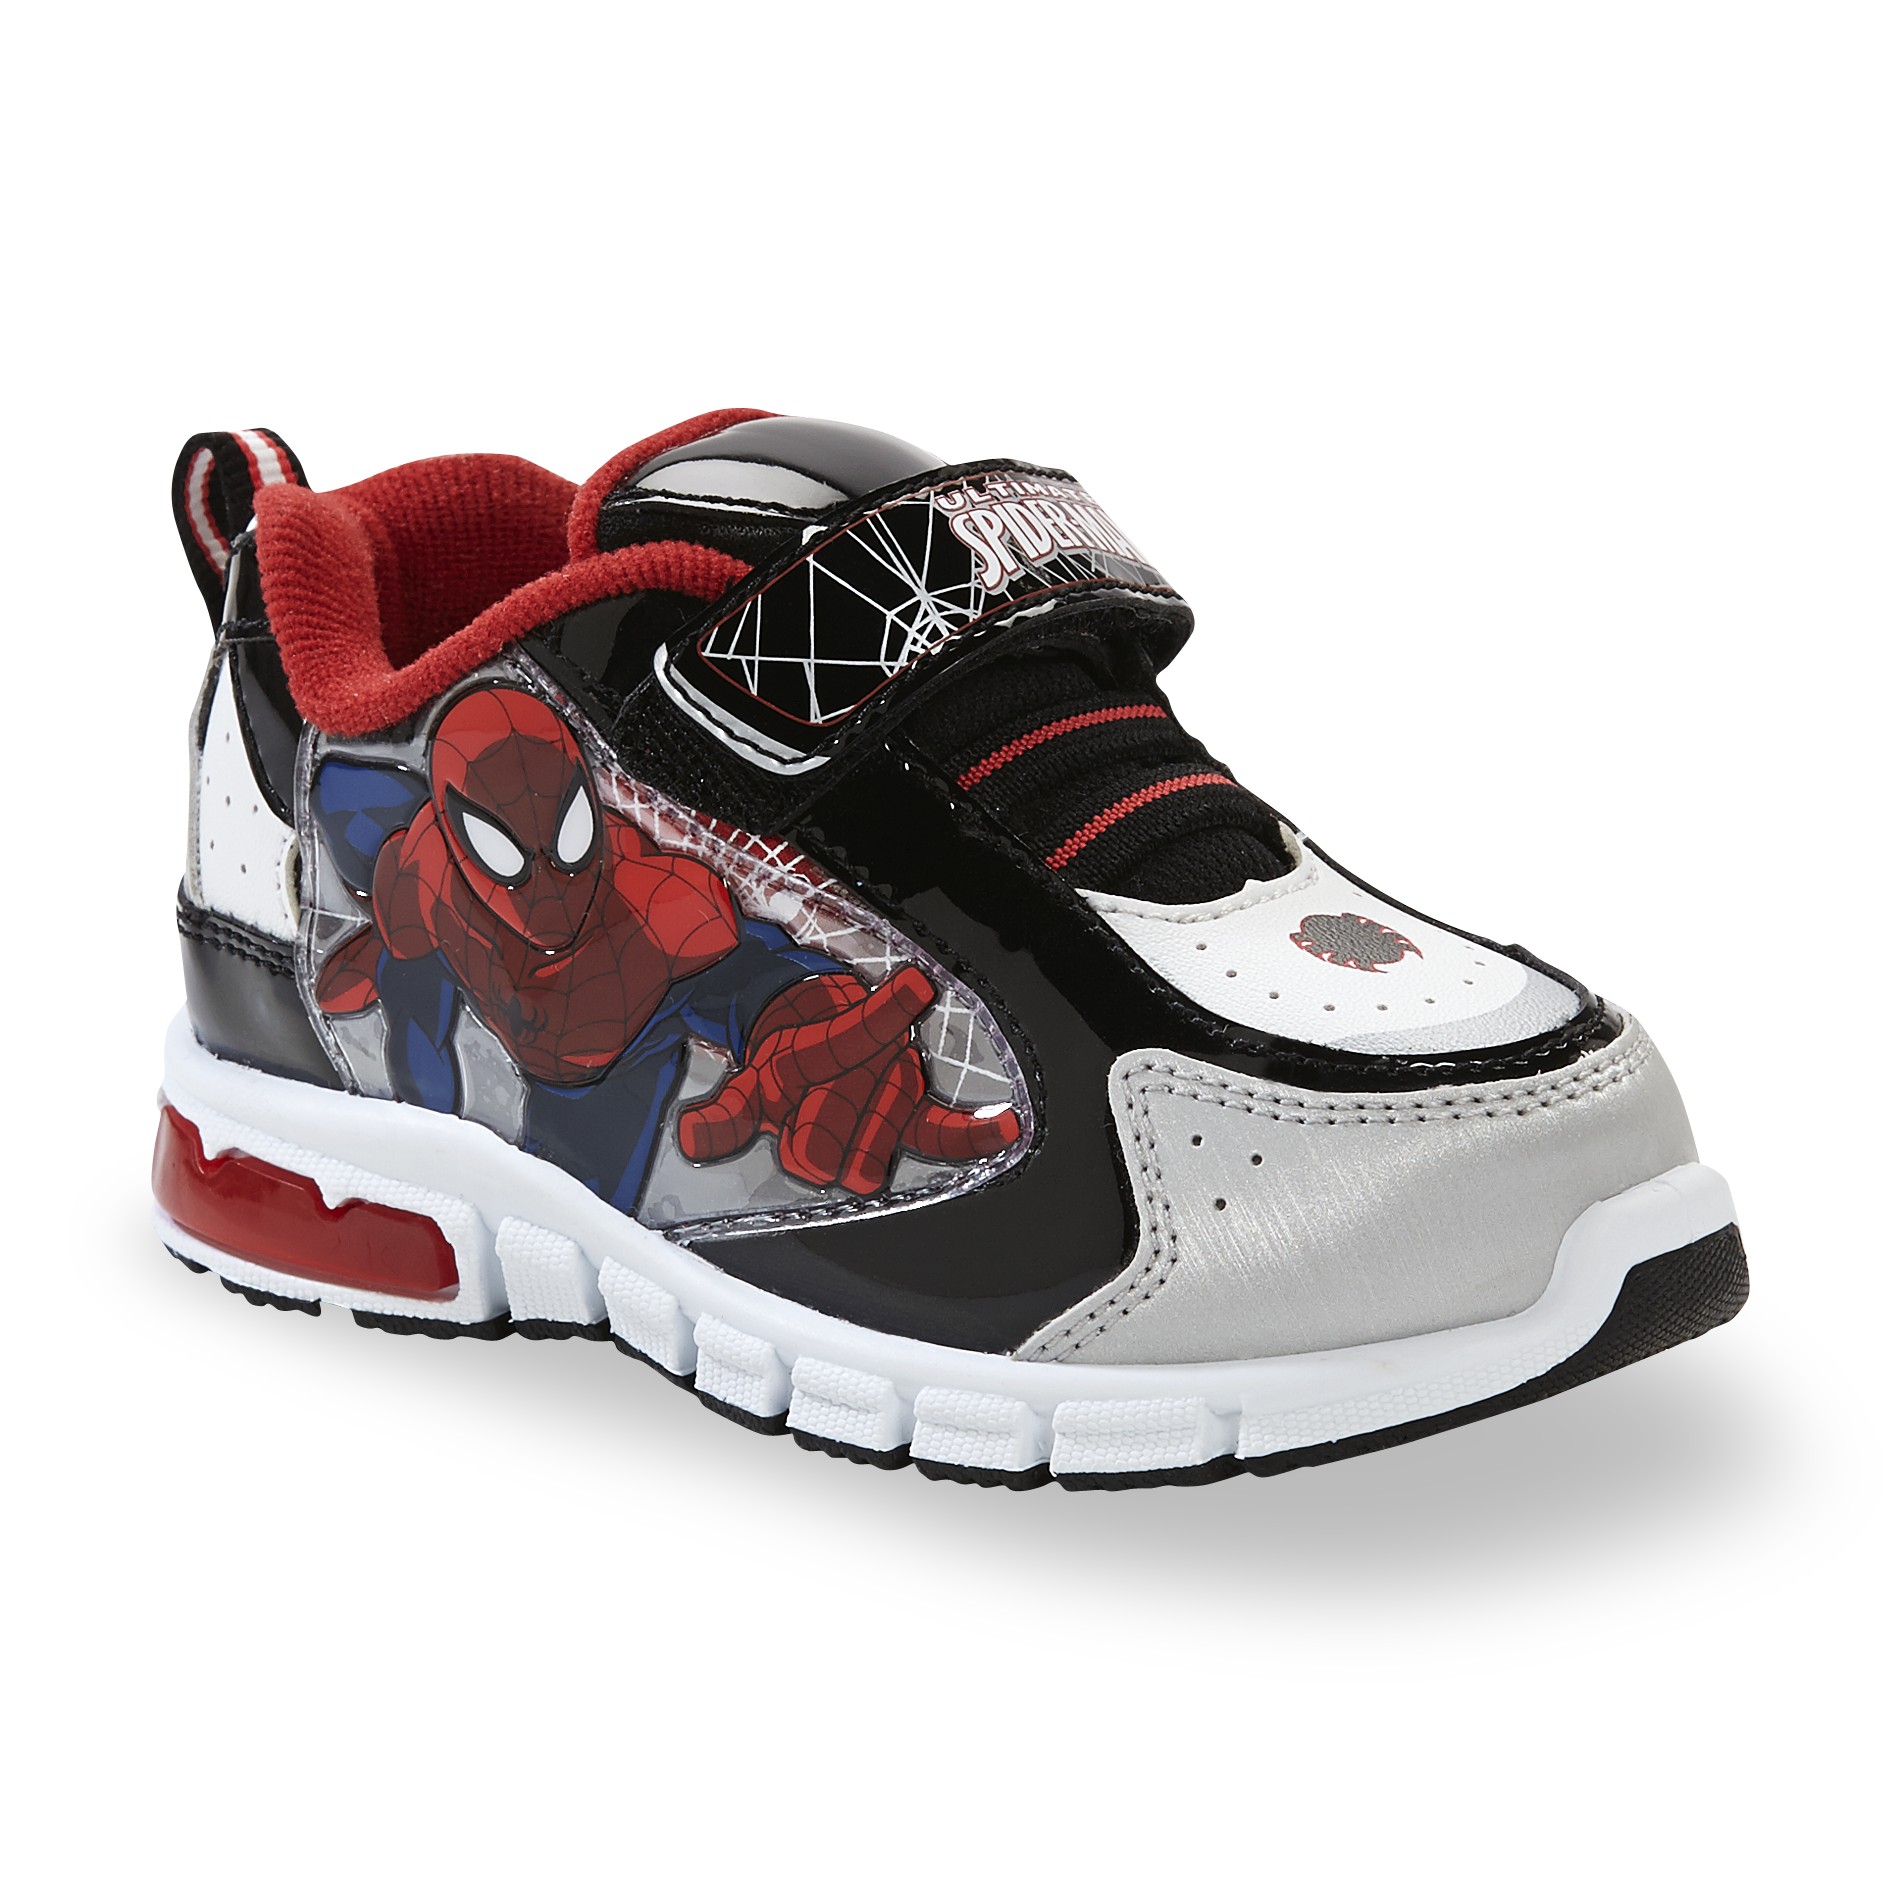 Marvel Spider-Man Toddler Boy's Black/White/Red Light-Up Athletic Shoes